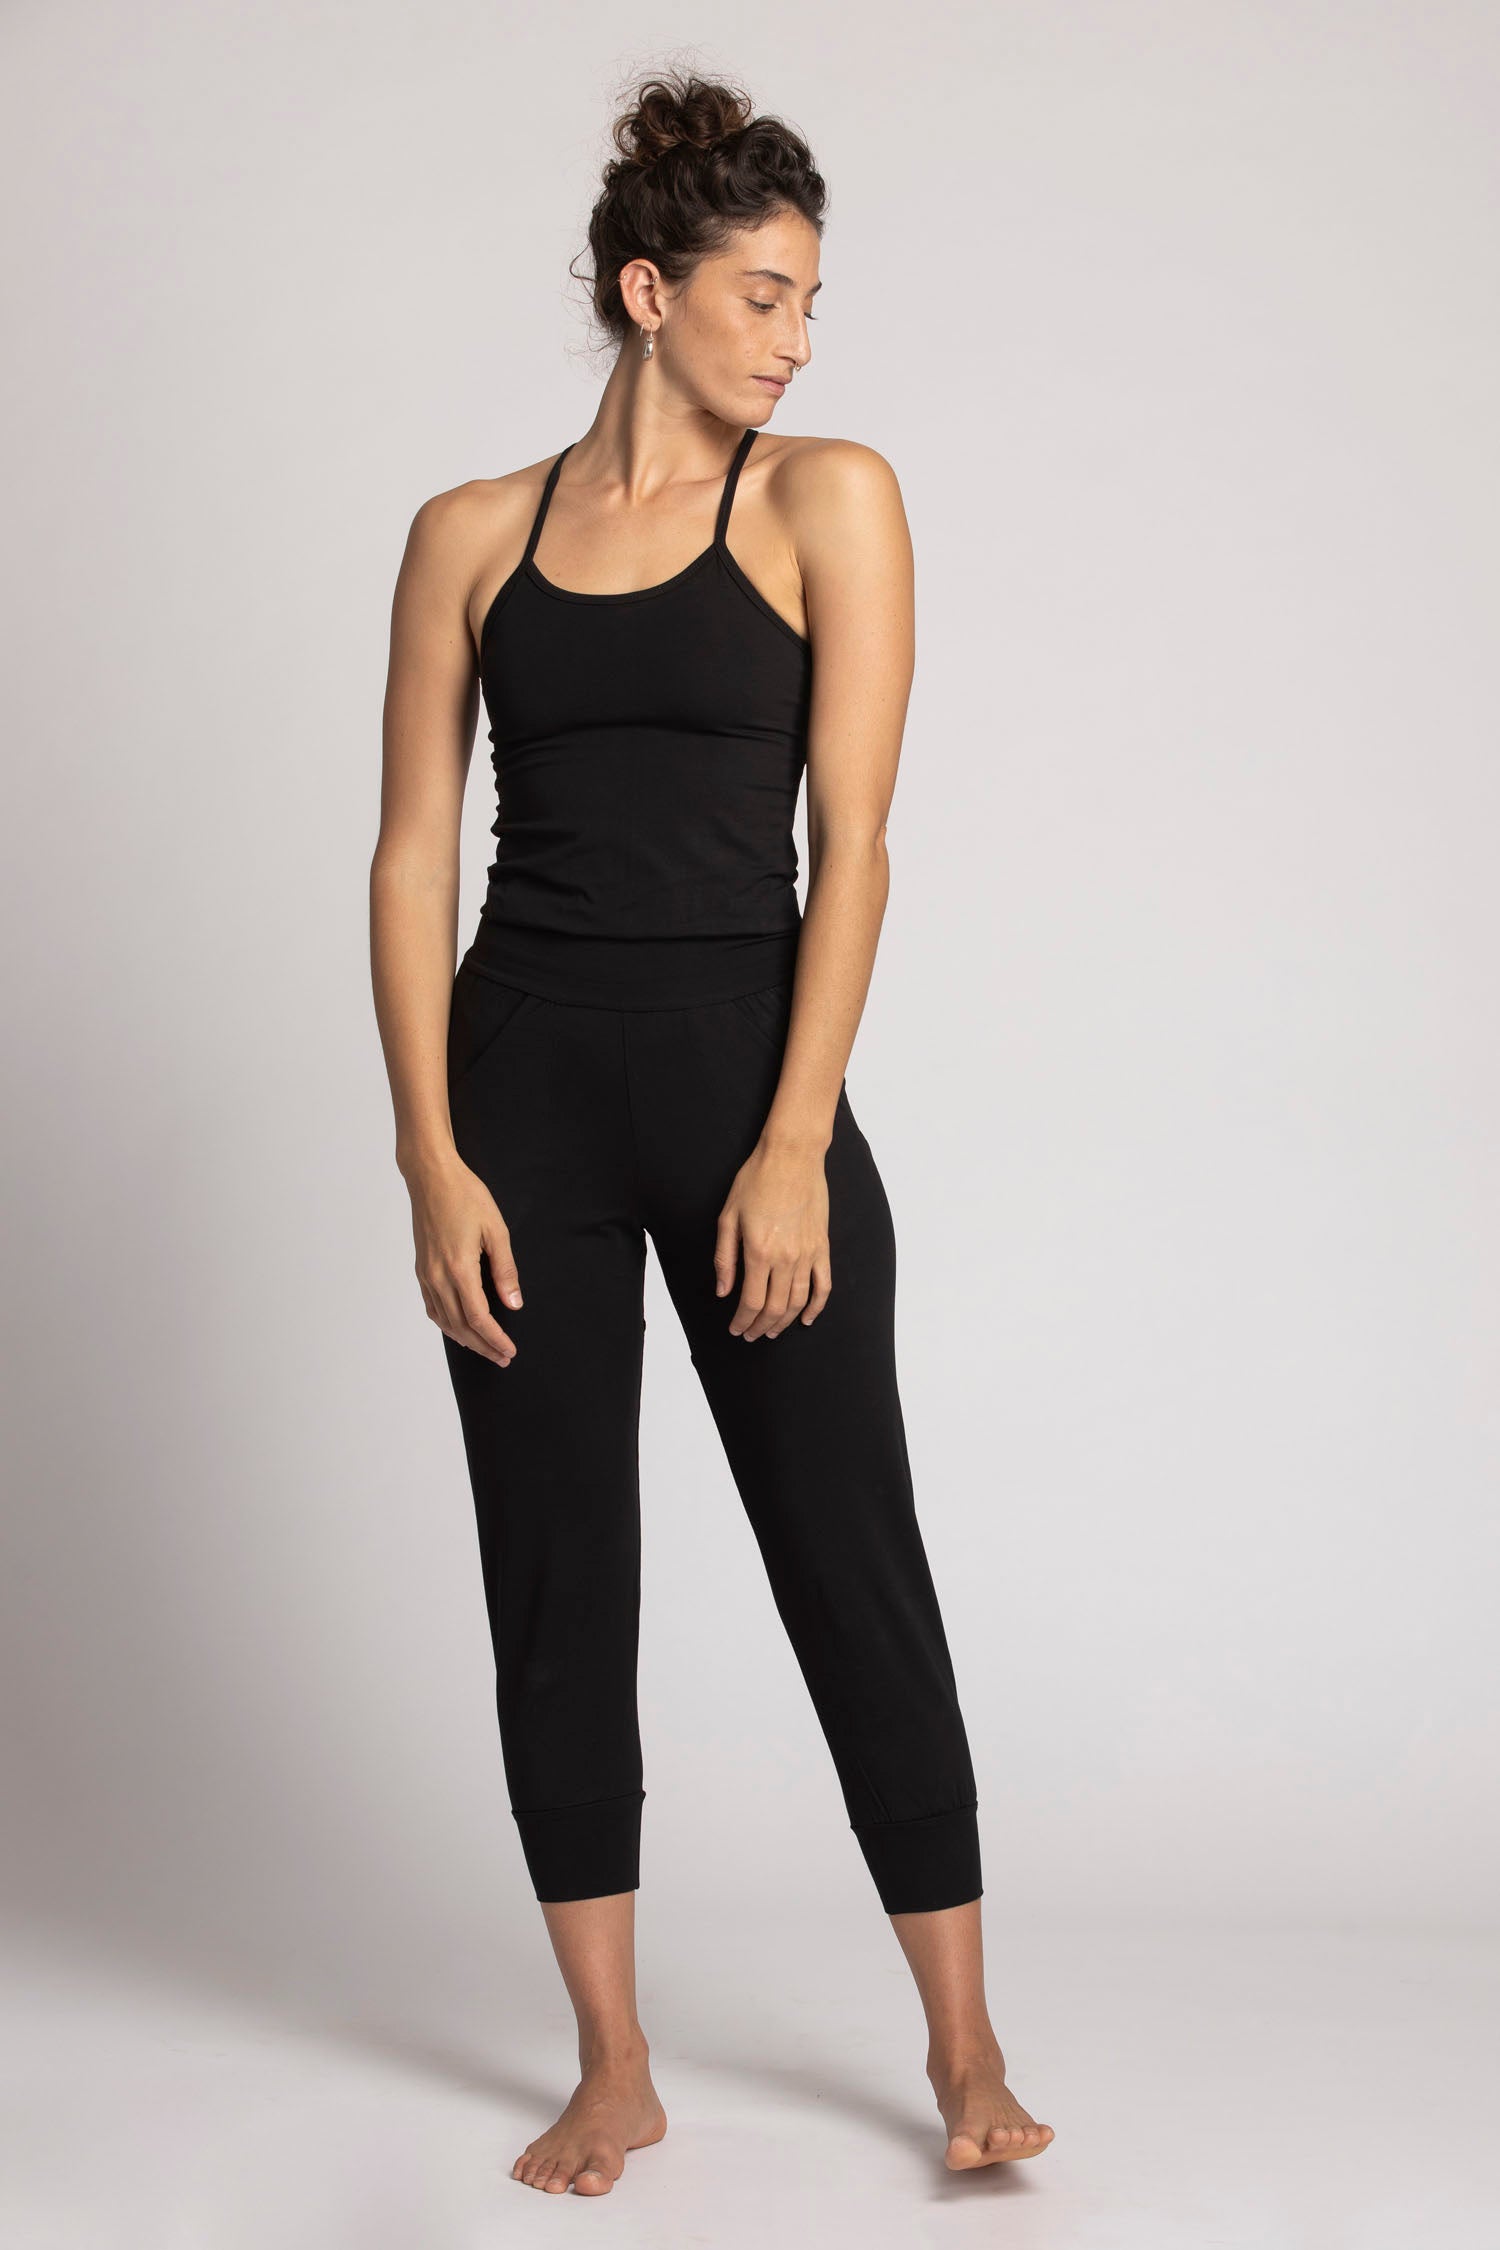 Organic Cotton Yoga Jumpsuit womens clothing Ripple Yoga Wear organic black S 